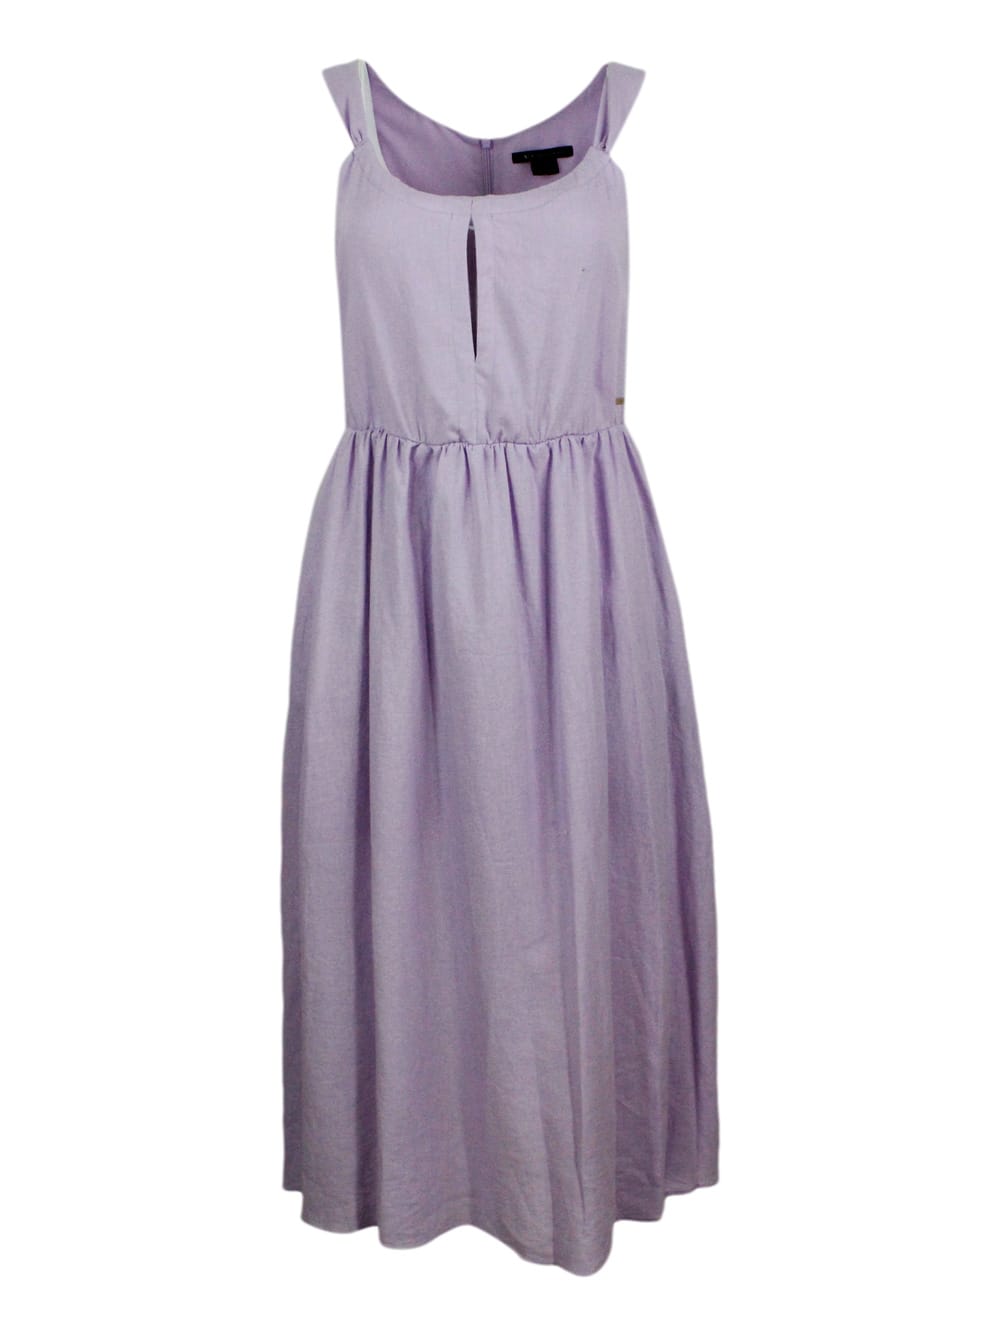 Sleeveless Dress Made Of Linen Blend With Elastic Gathering At The Waist. Welt Pockets